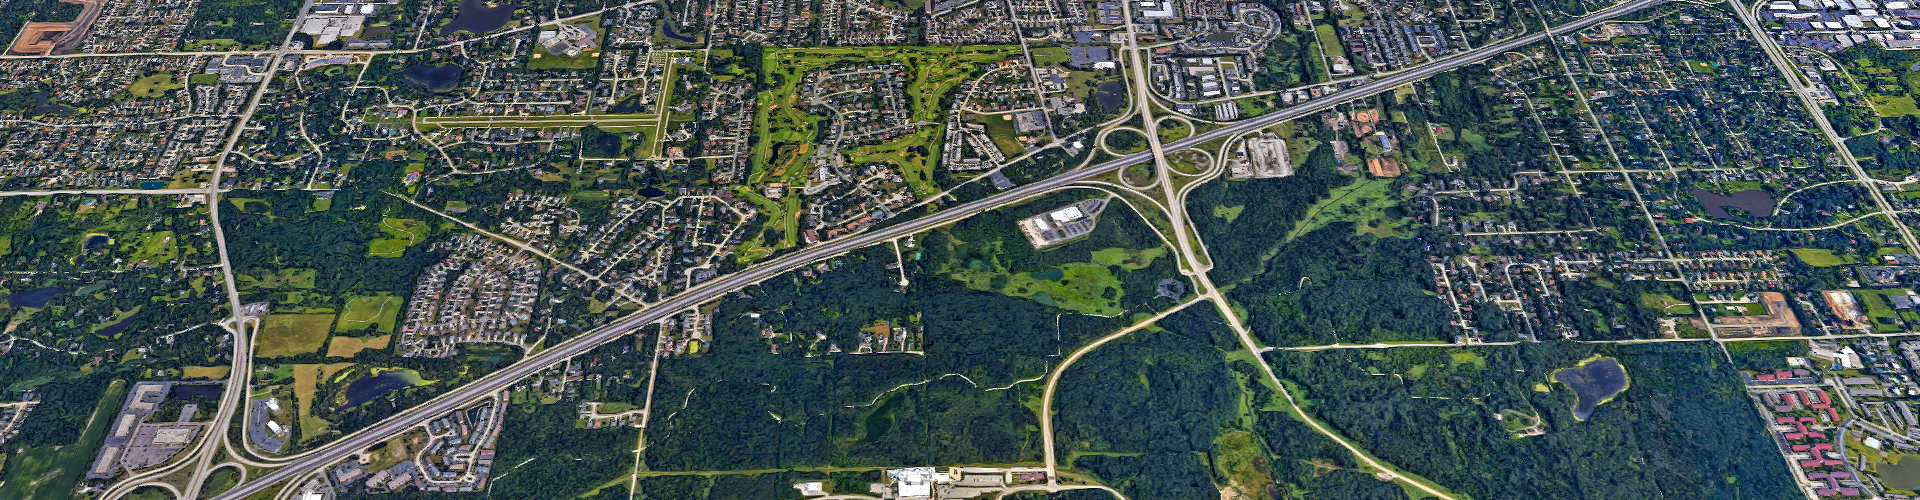 aerial view of roads in Darien, IL